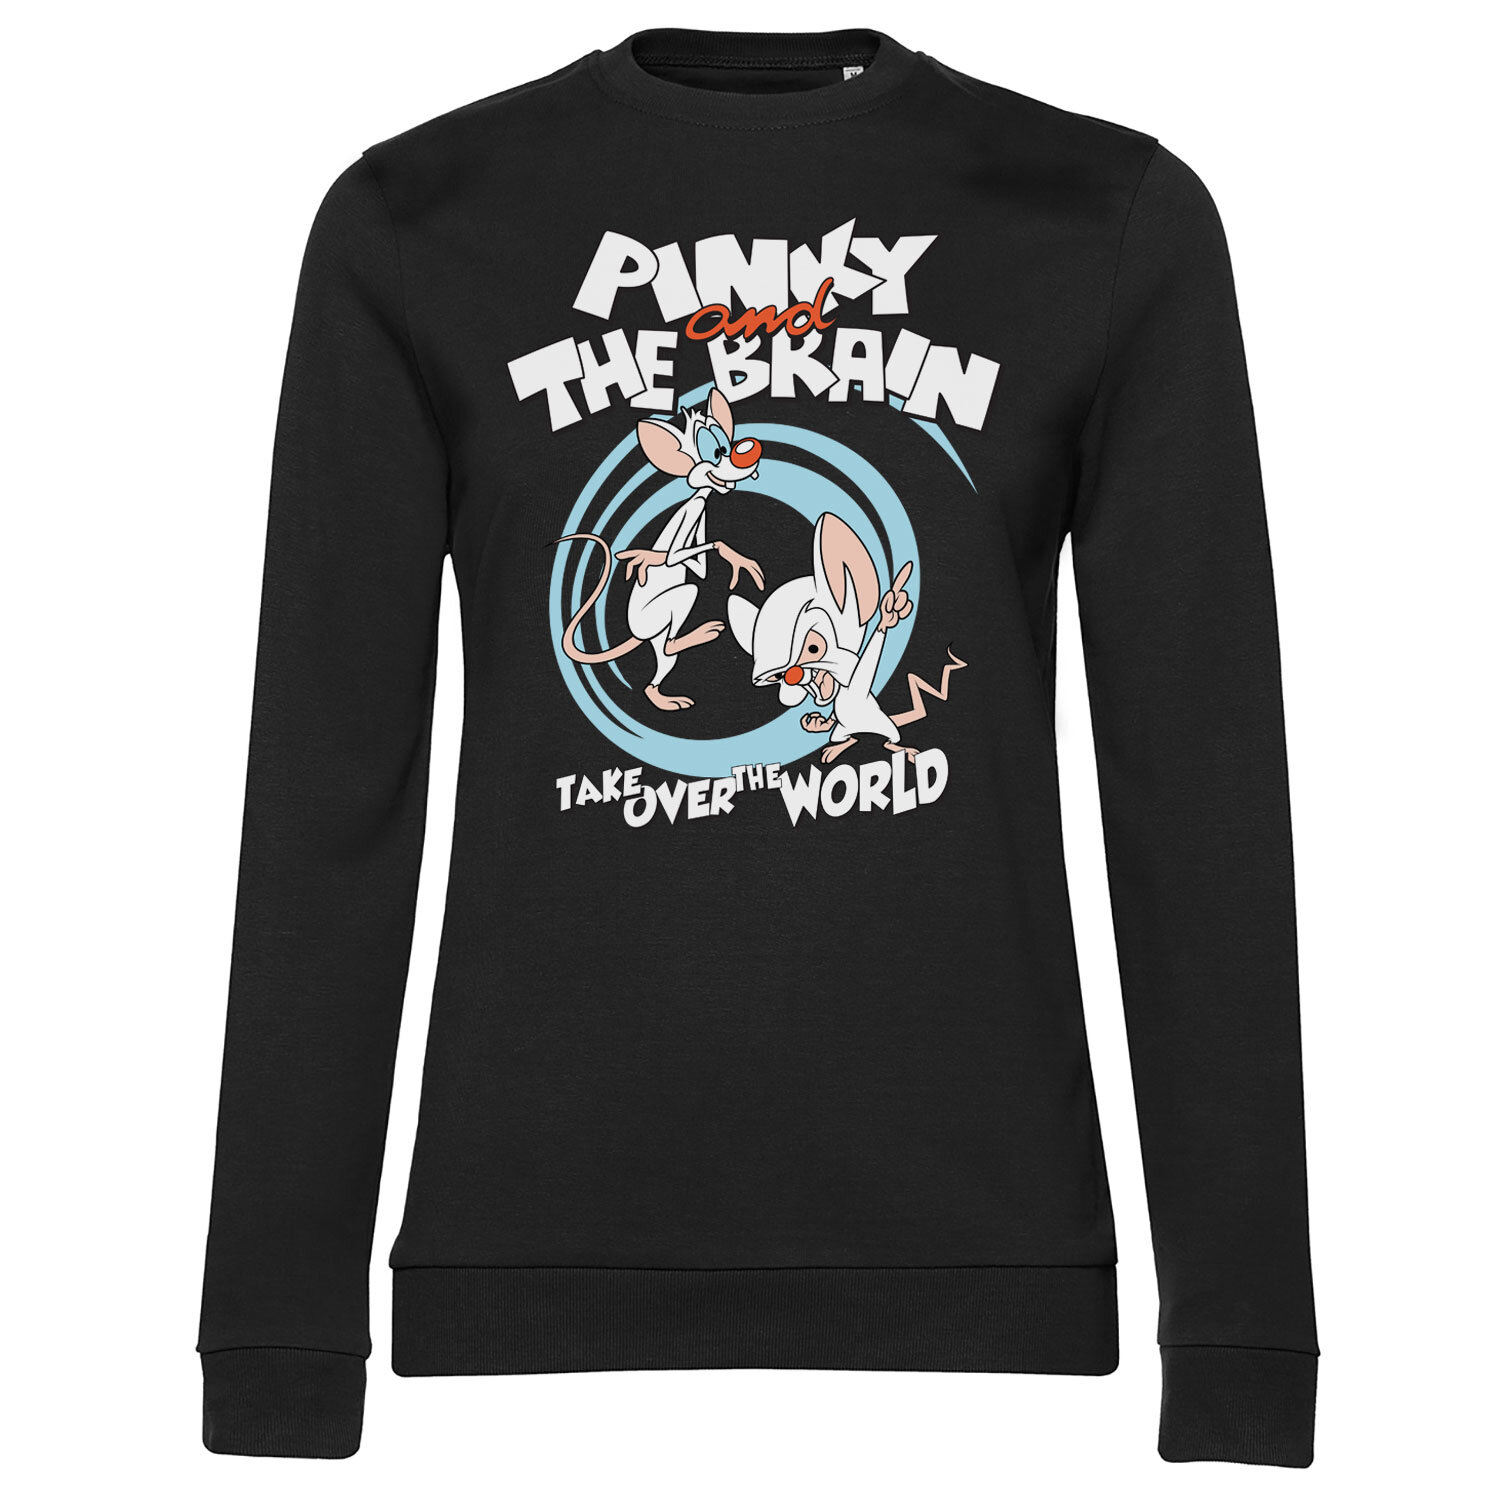 Take Over The World Girly Sweatshirt